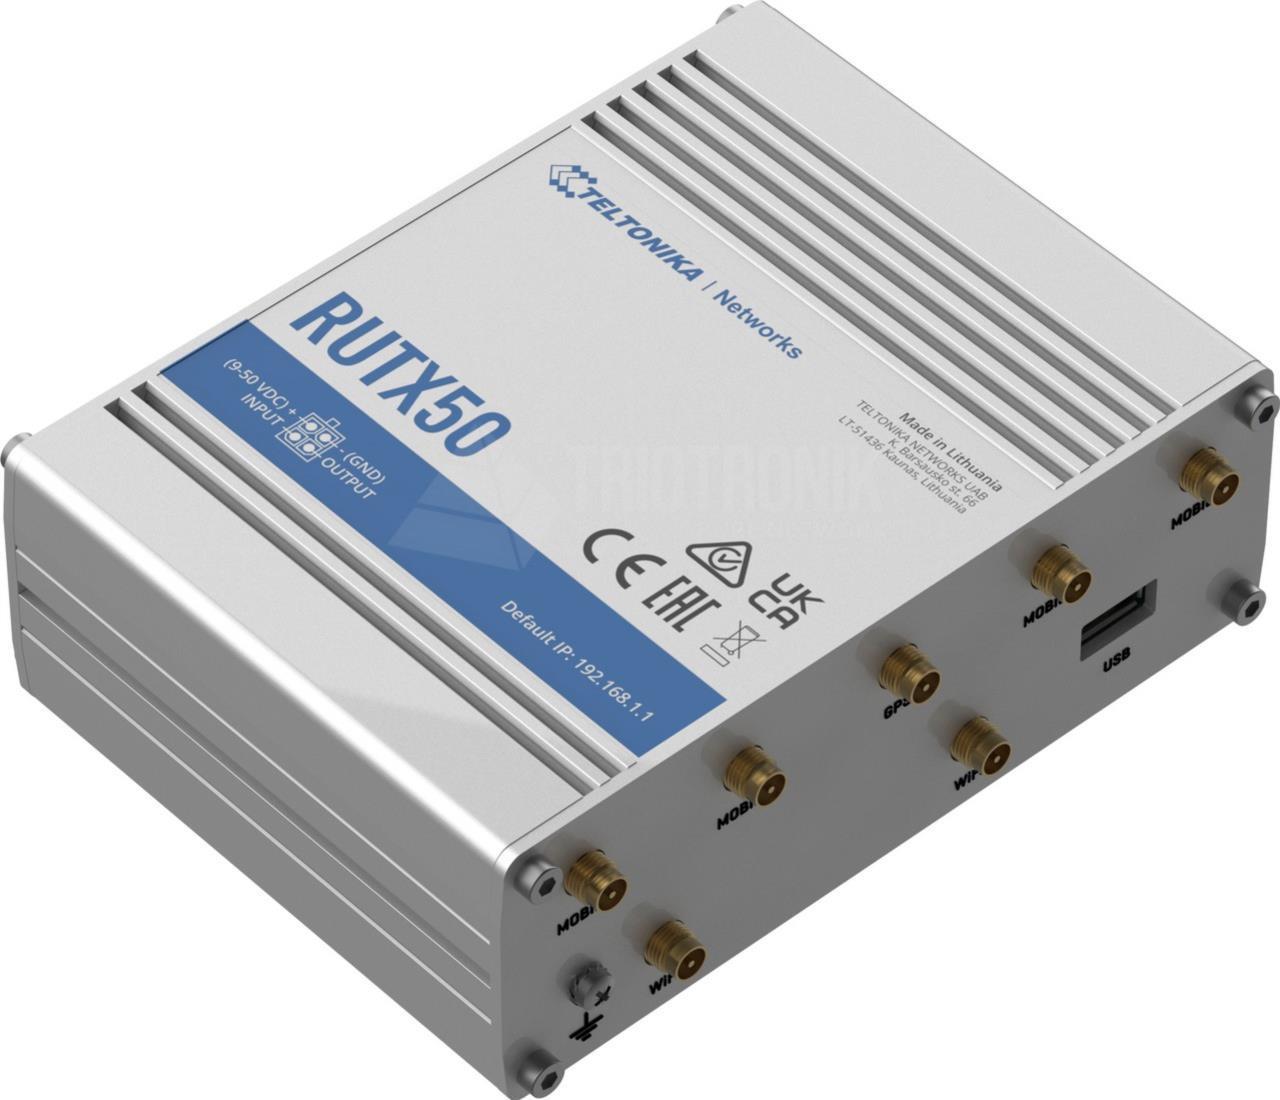 Teltonika RUTX50 Wireless Router (RUTX50)